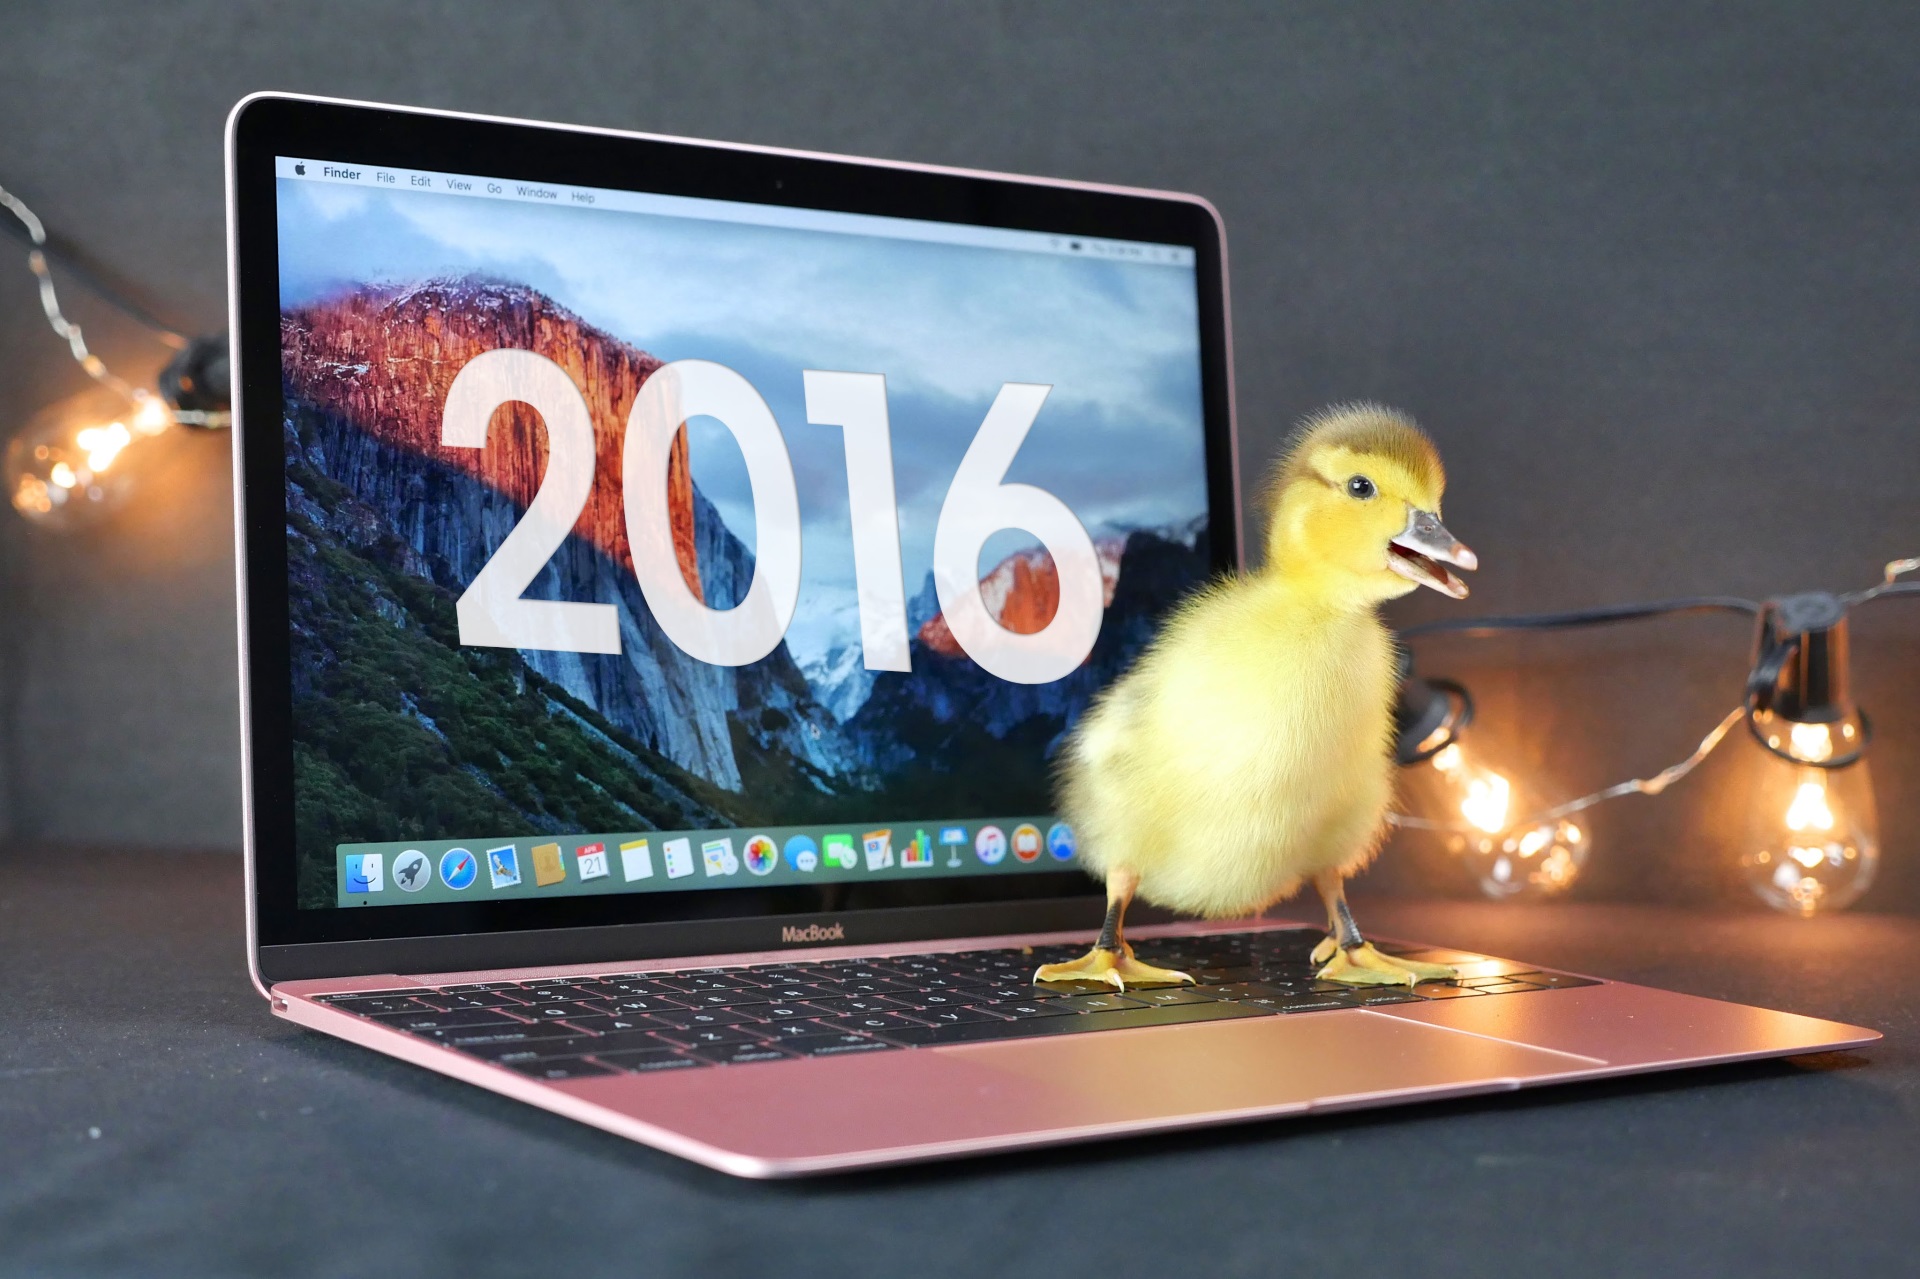 У MacBook Pro 2016 виявлена несподівана проблема